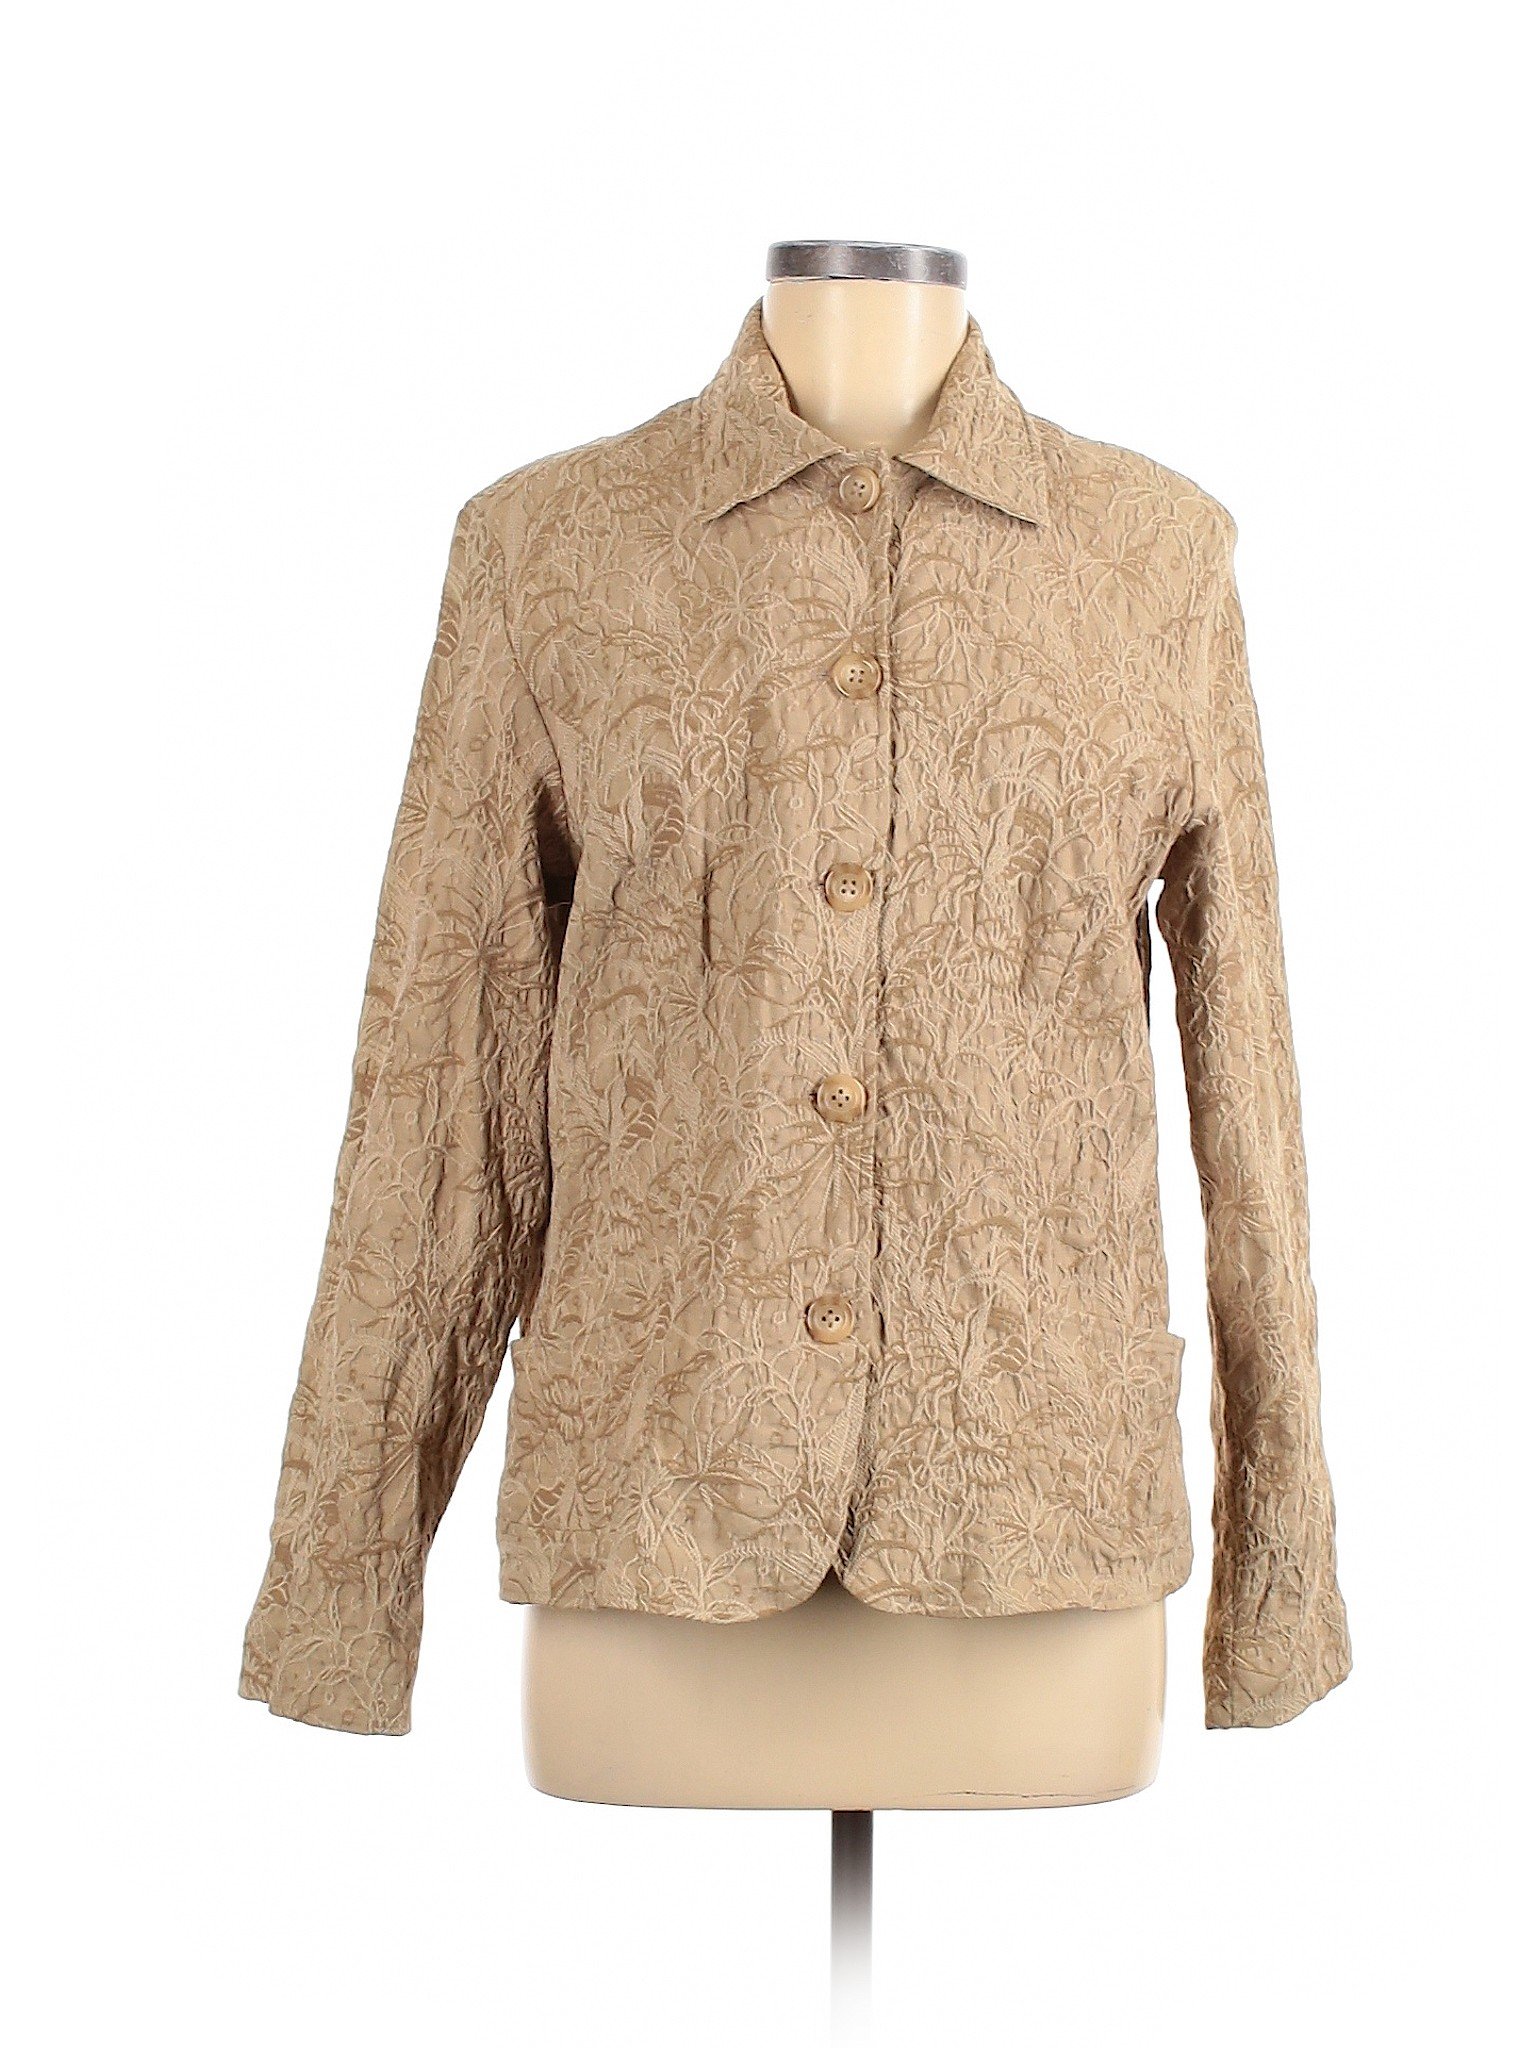 Coldwater Creek Women Brown Jacket M | eBay